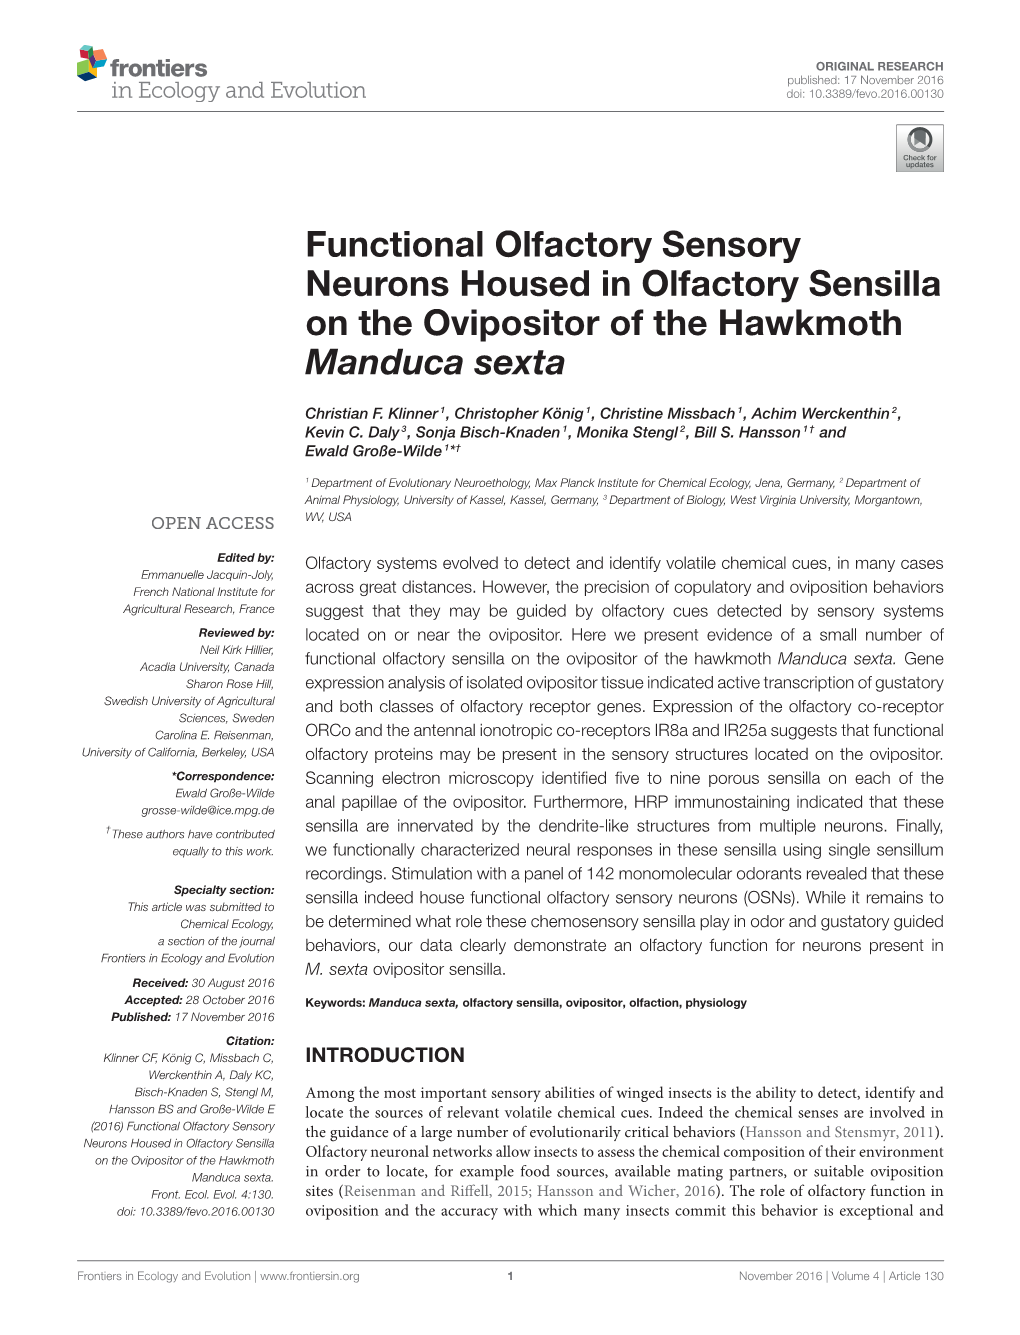 Functional Olfactory Sensory Neurons Housed in Olfactory Sensilla on the Ovipositor of the Hawkmoth Manduca Sexta